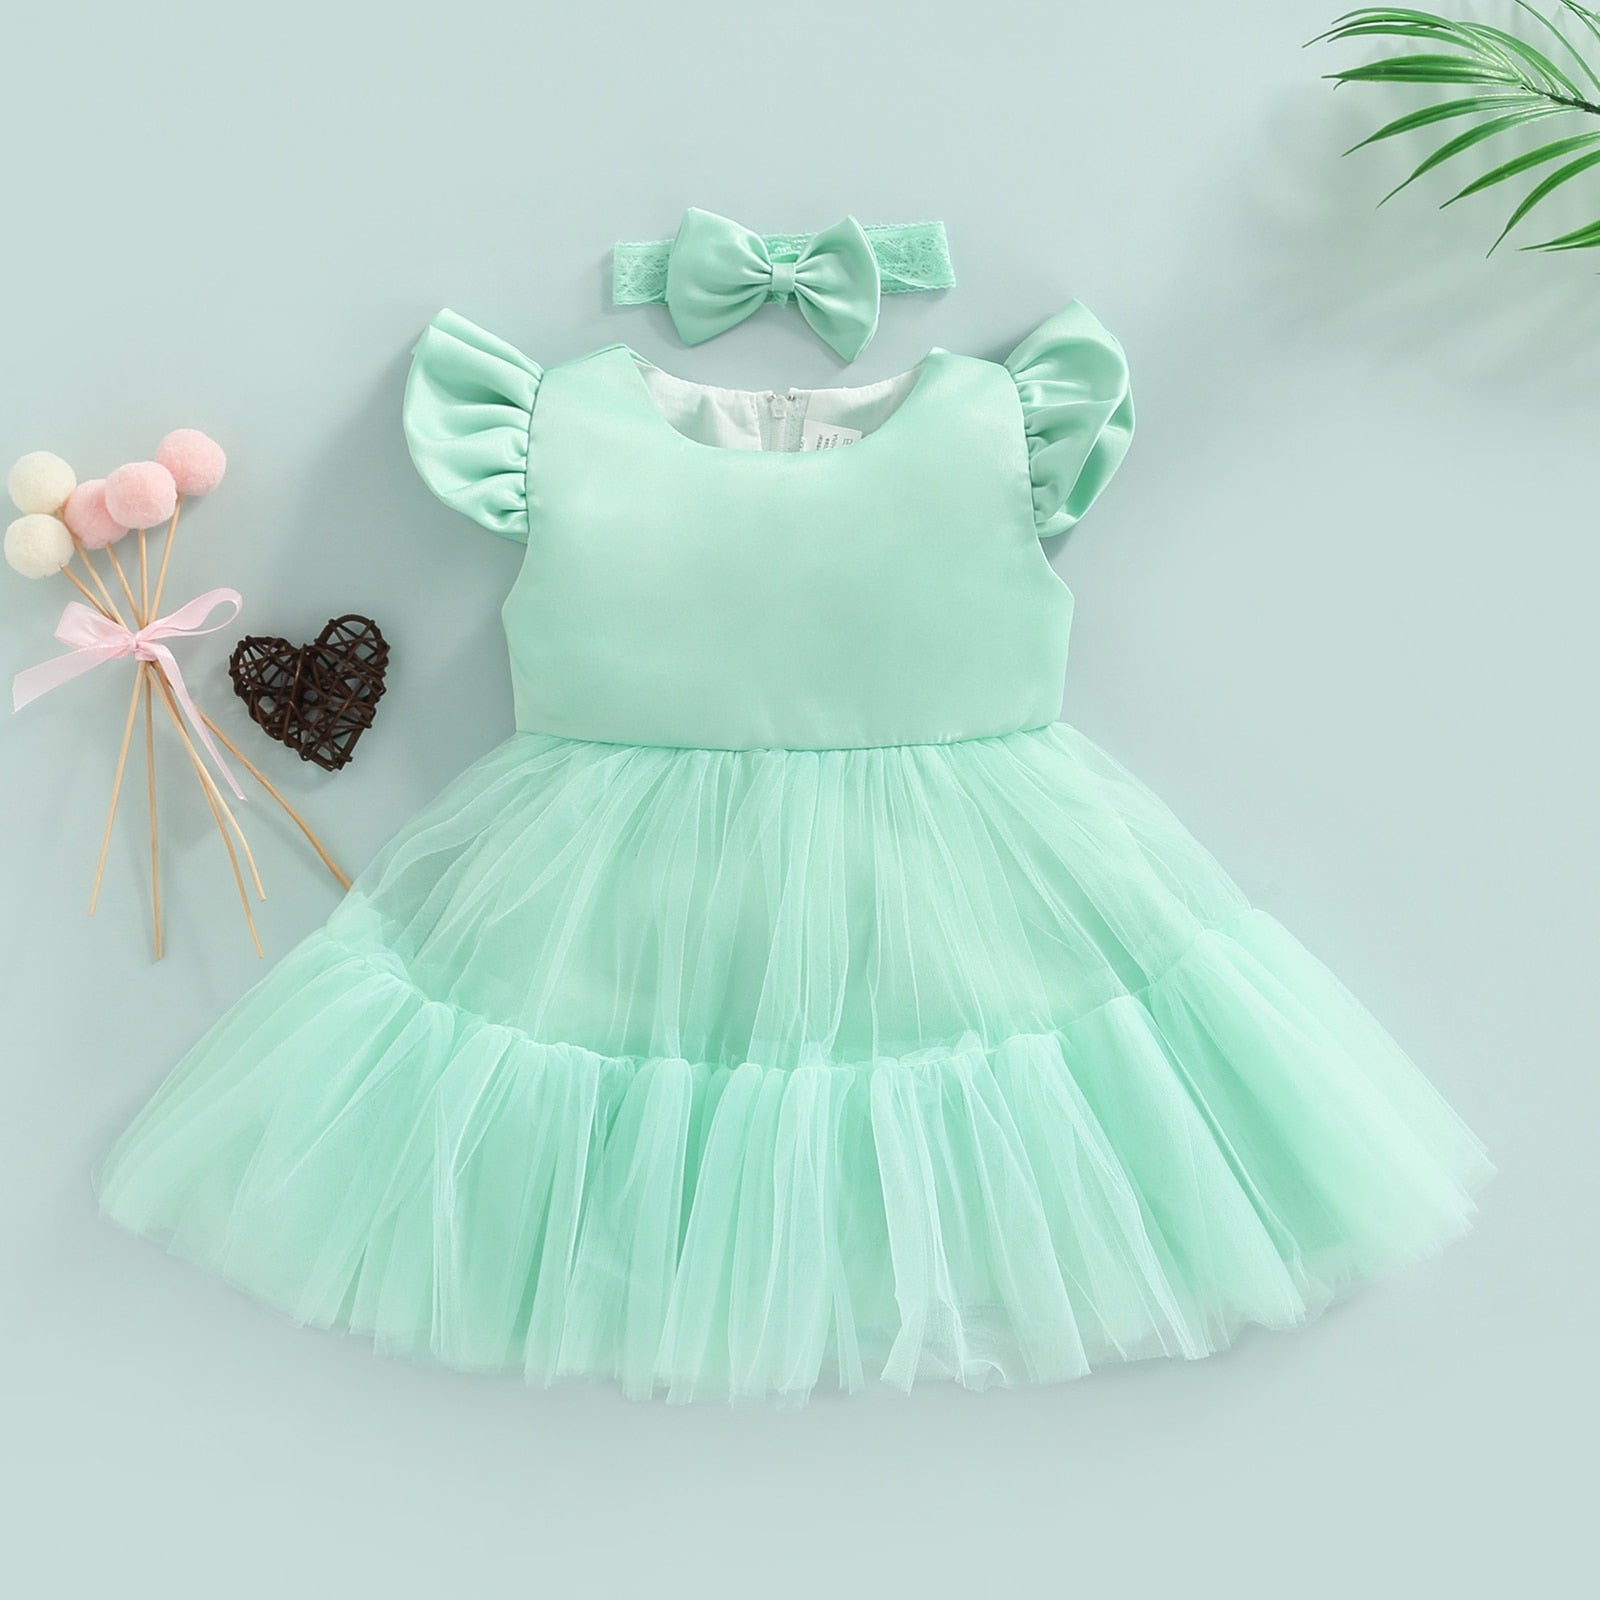 Vestido Infantil + Lacinho Tule vestido Loja Click Certo Verde 2-3 anos 57cm 